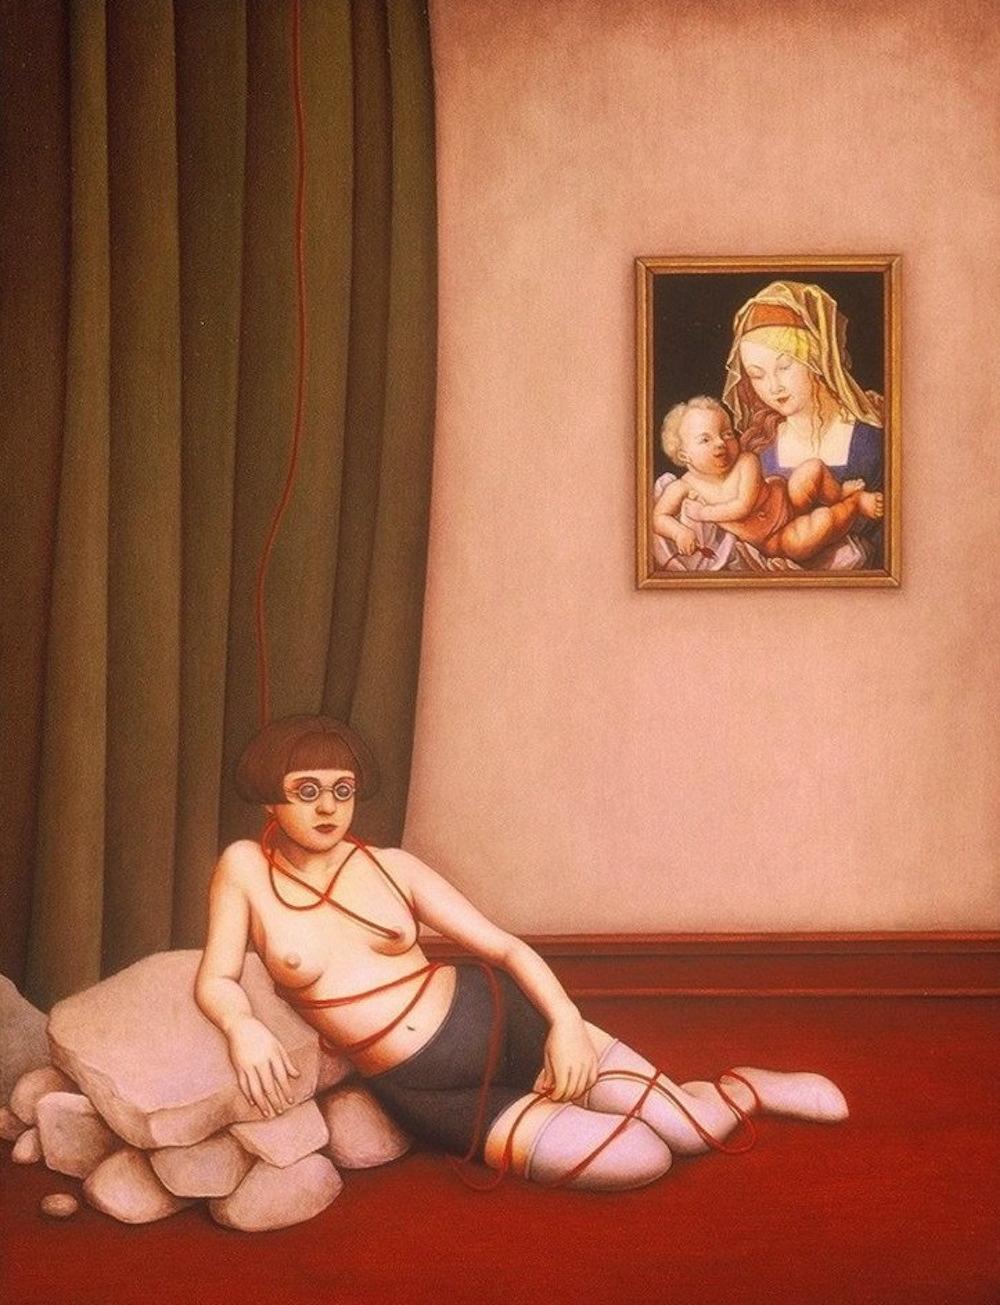 Room Alone / Öl auf Leinwand - figurativer Surrealismus